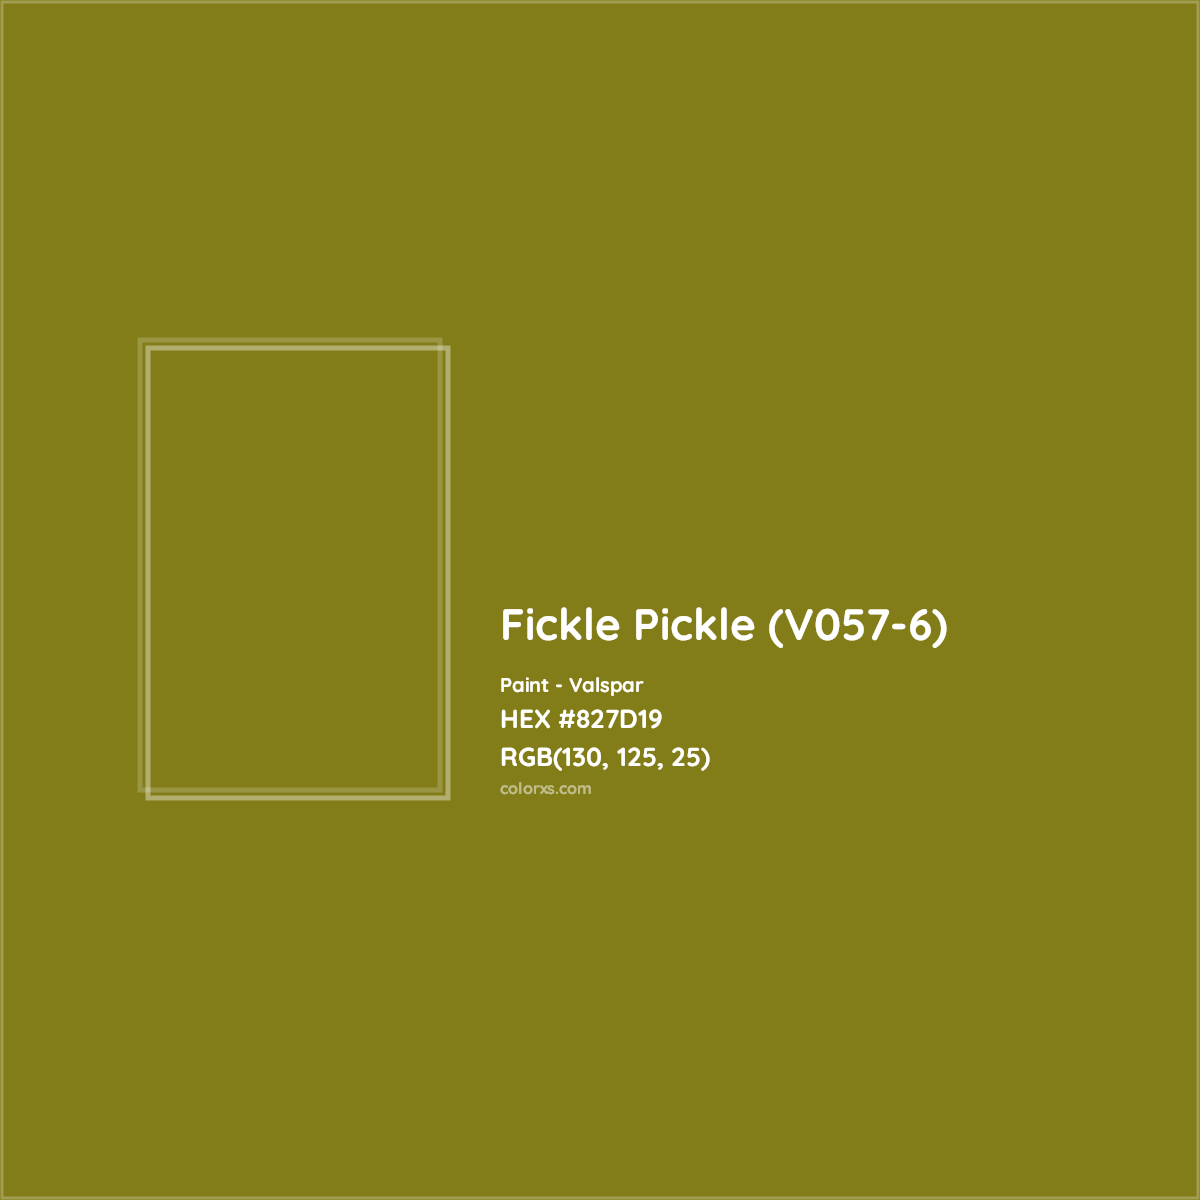 HEX #827D19 Fickle Pickle (V057-6) Paint Valspar - Color Code